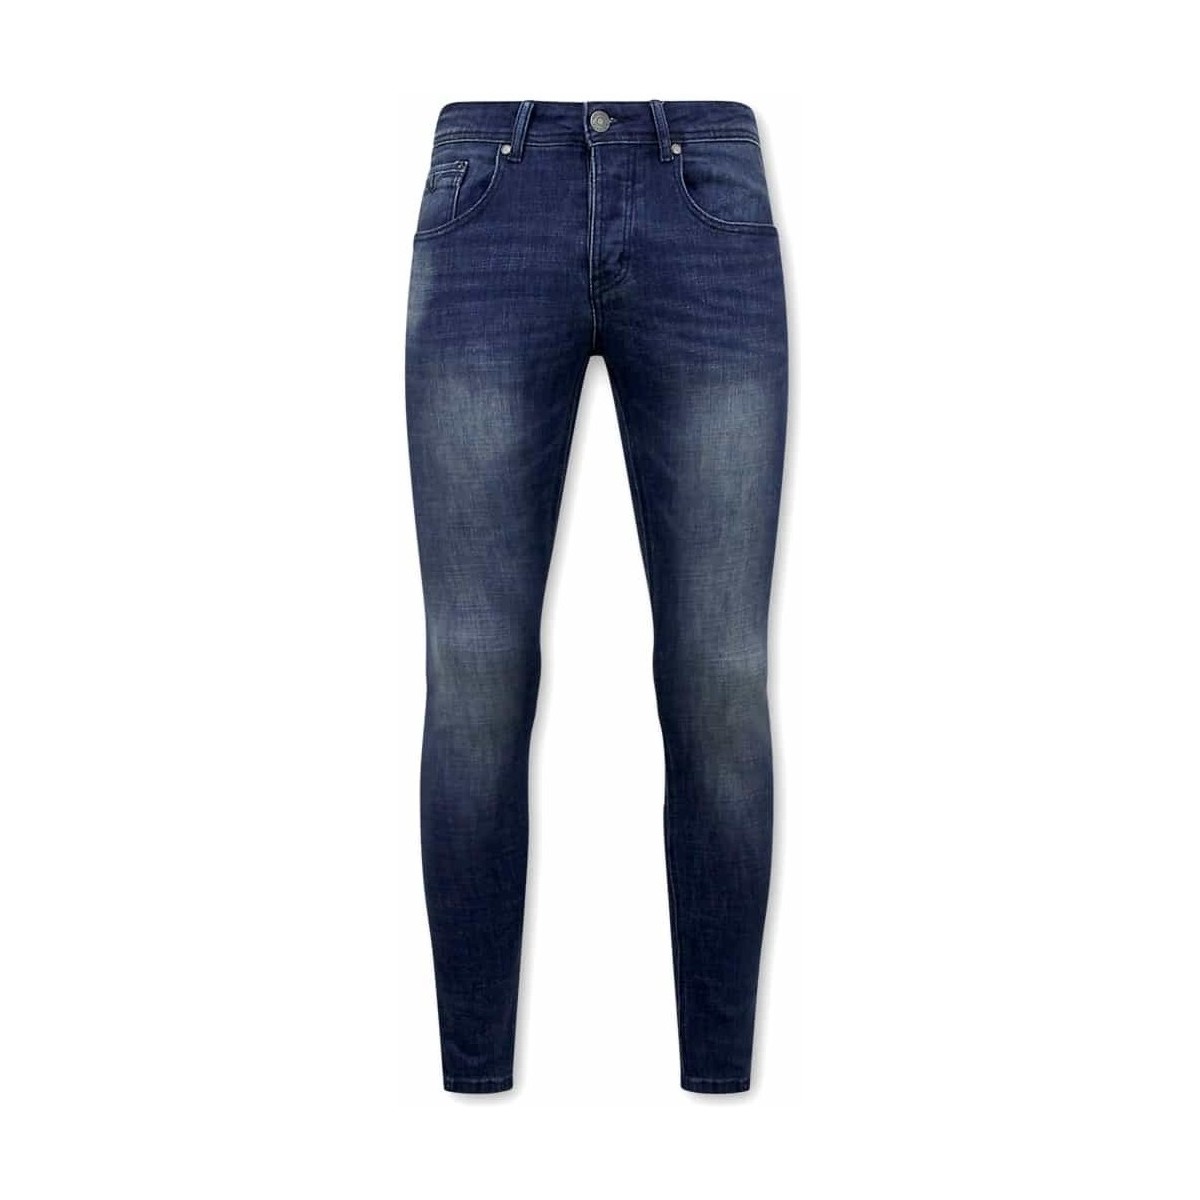 textil Herre Smalle jeans True Rise 115085334 Blå